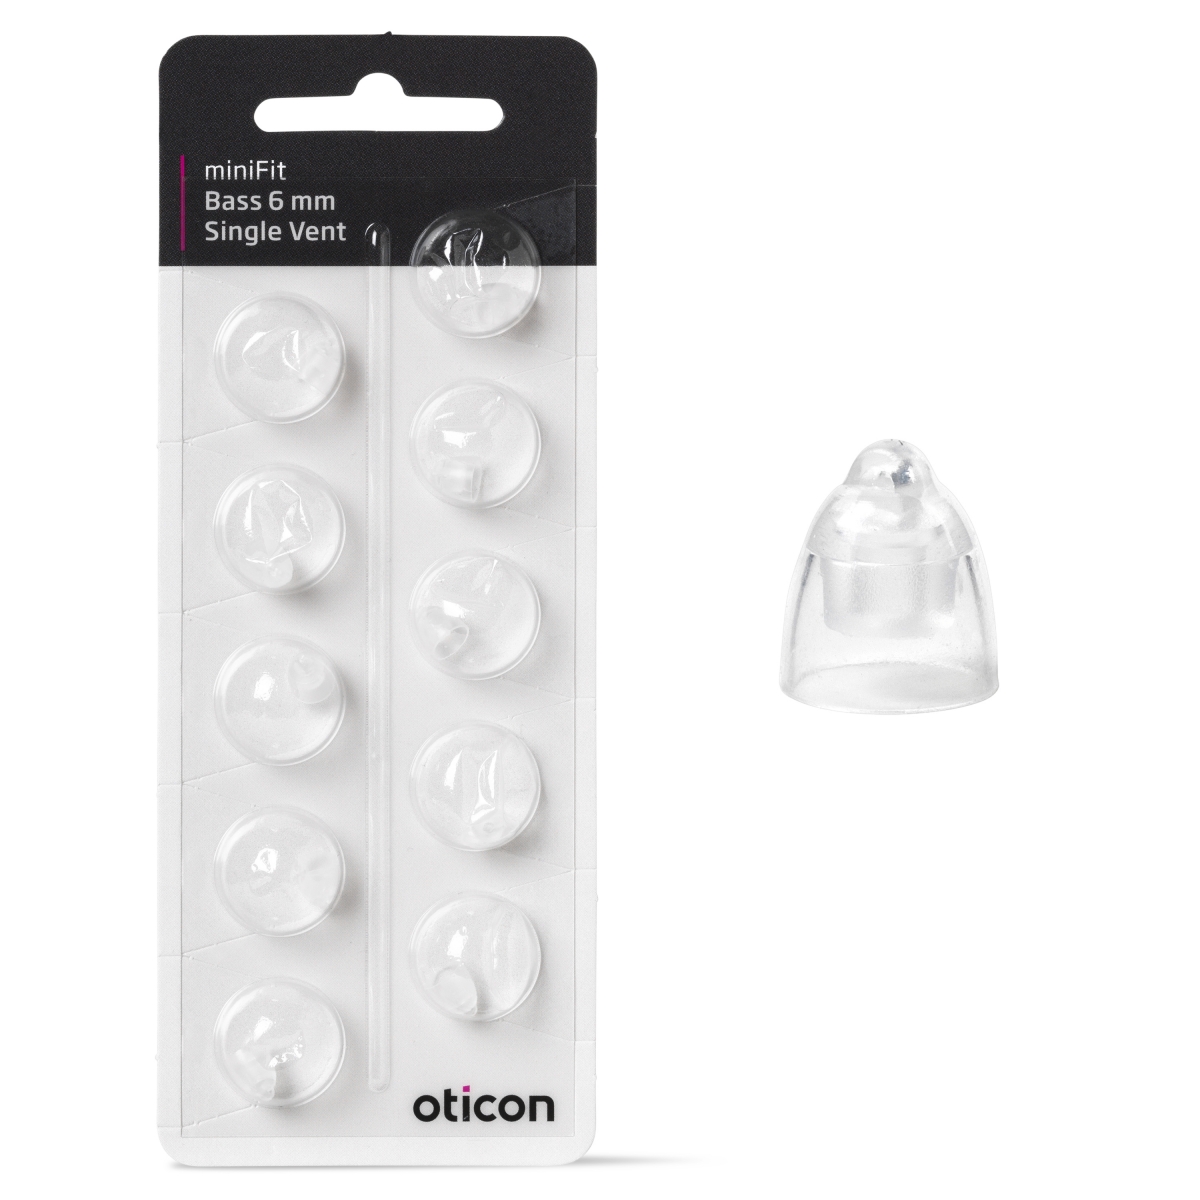 Se Oticon miniFit Bas-tip (single vent) 6mm hos Japebo.dk